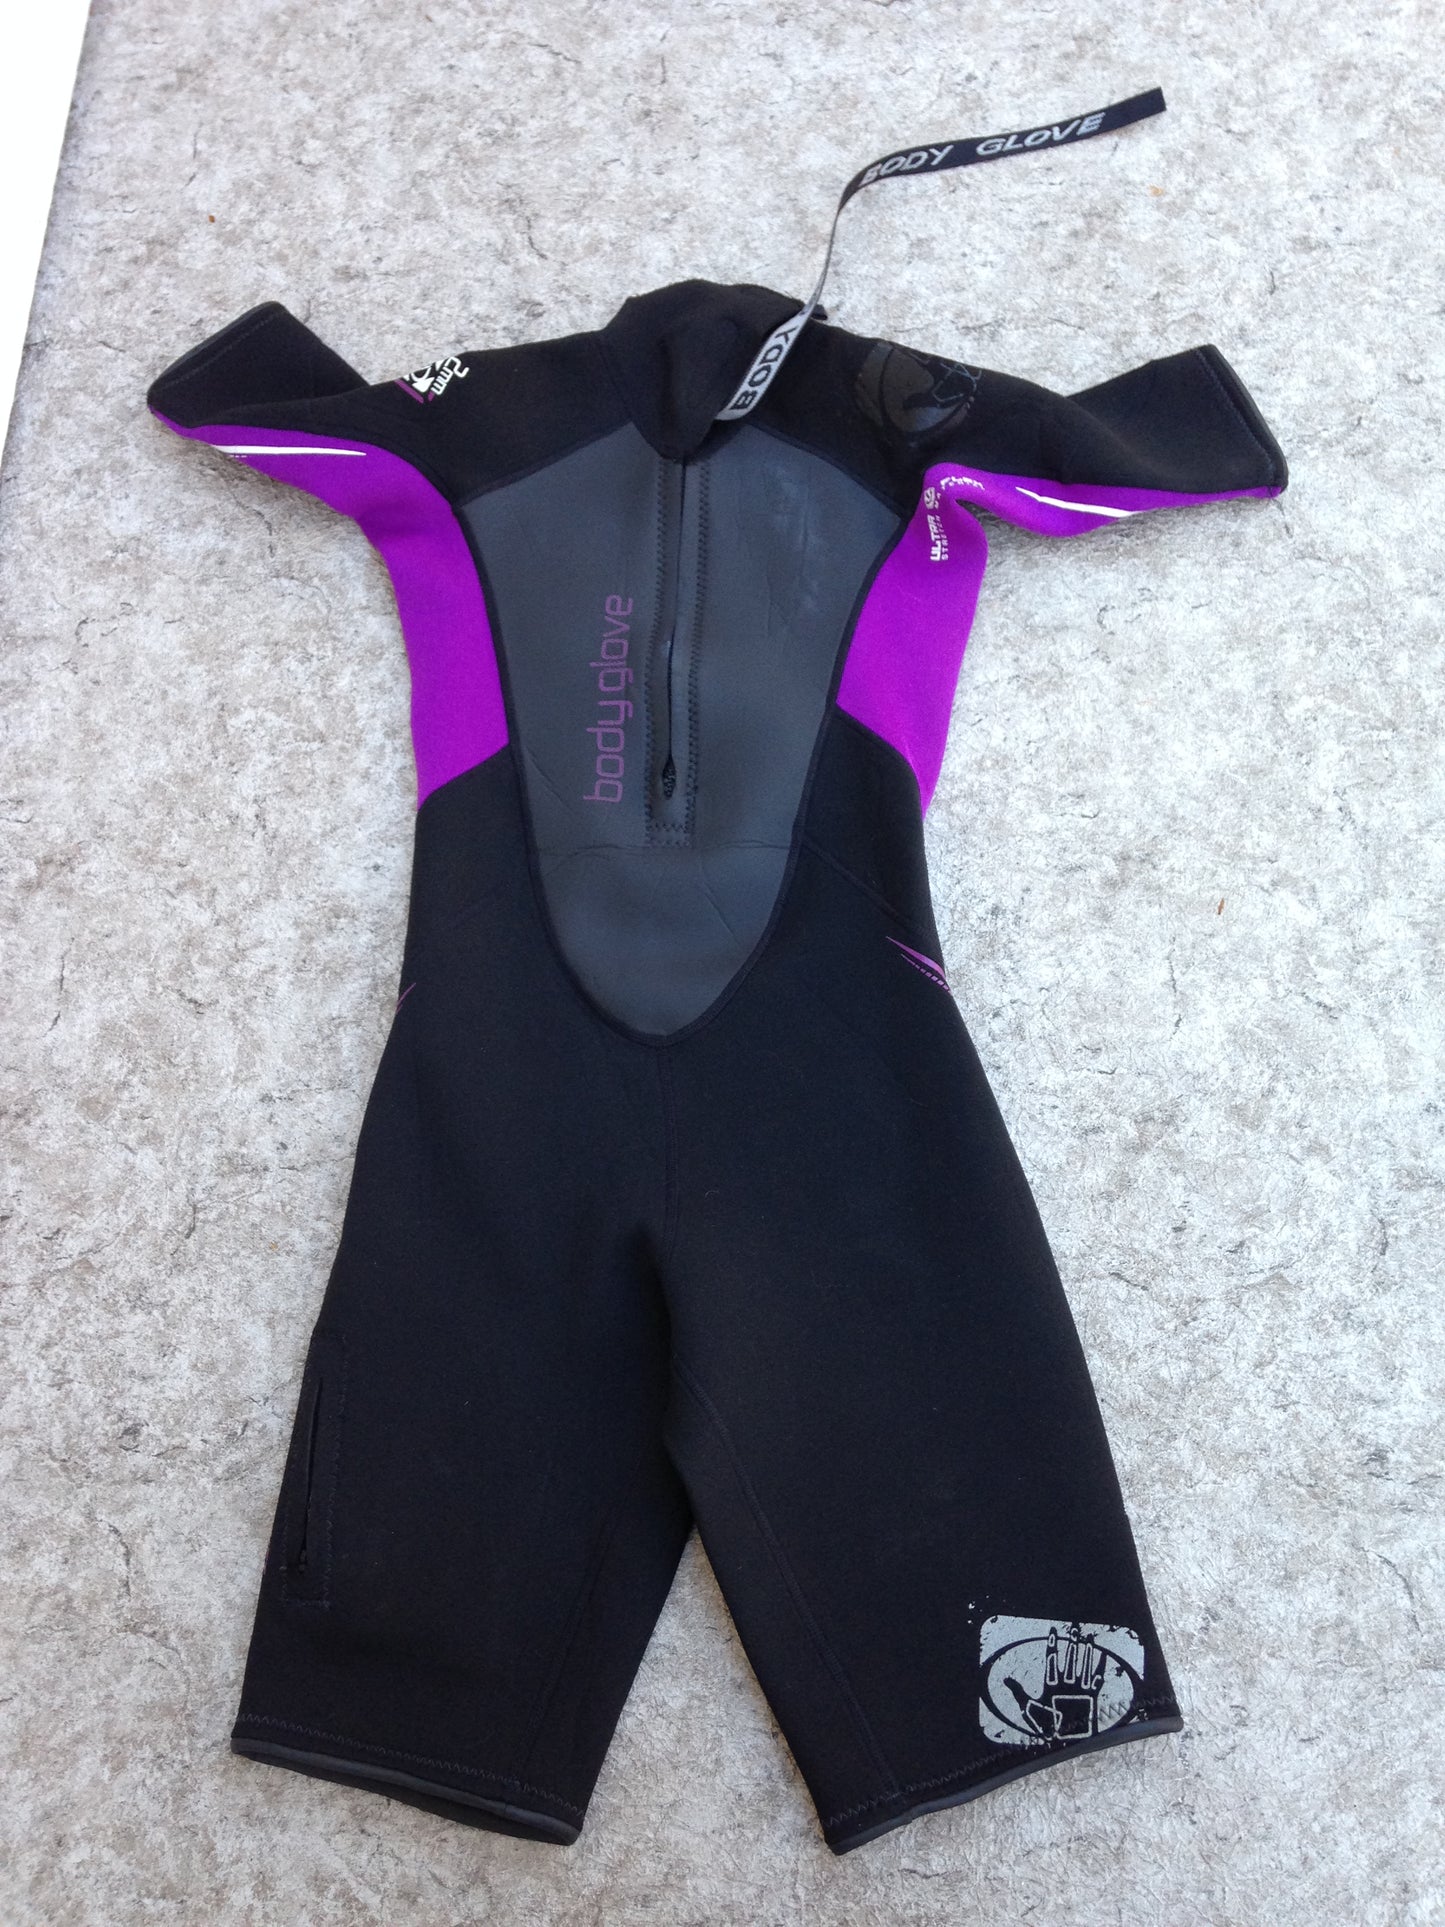 Wetsuit Ladies Size 5-6 Body Glove 2-3mm Neoprene Excellent